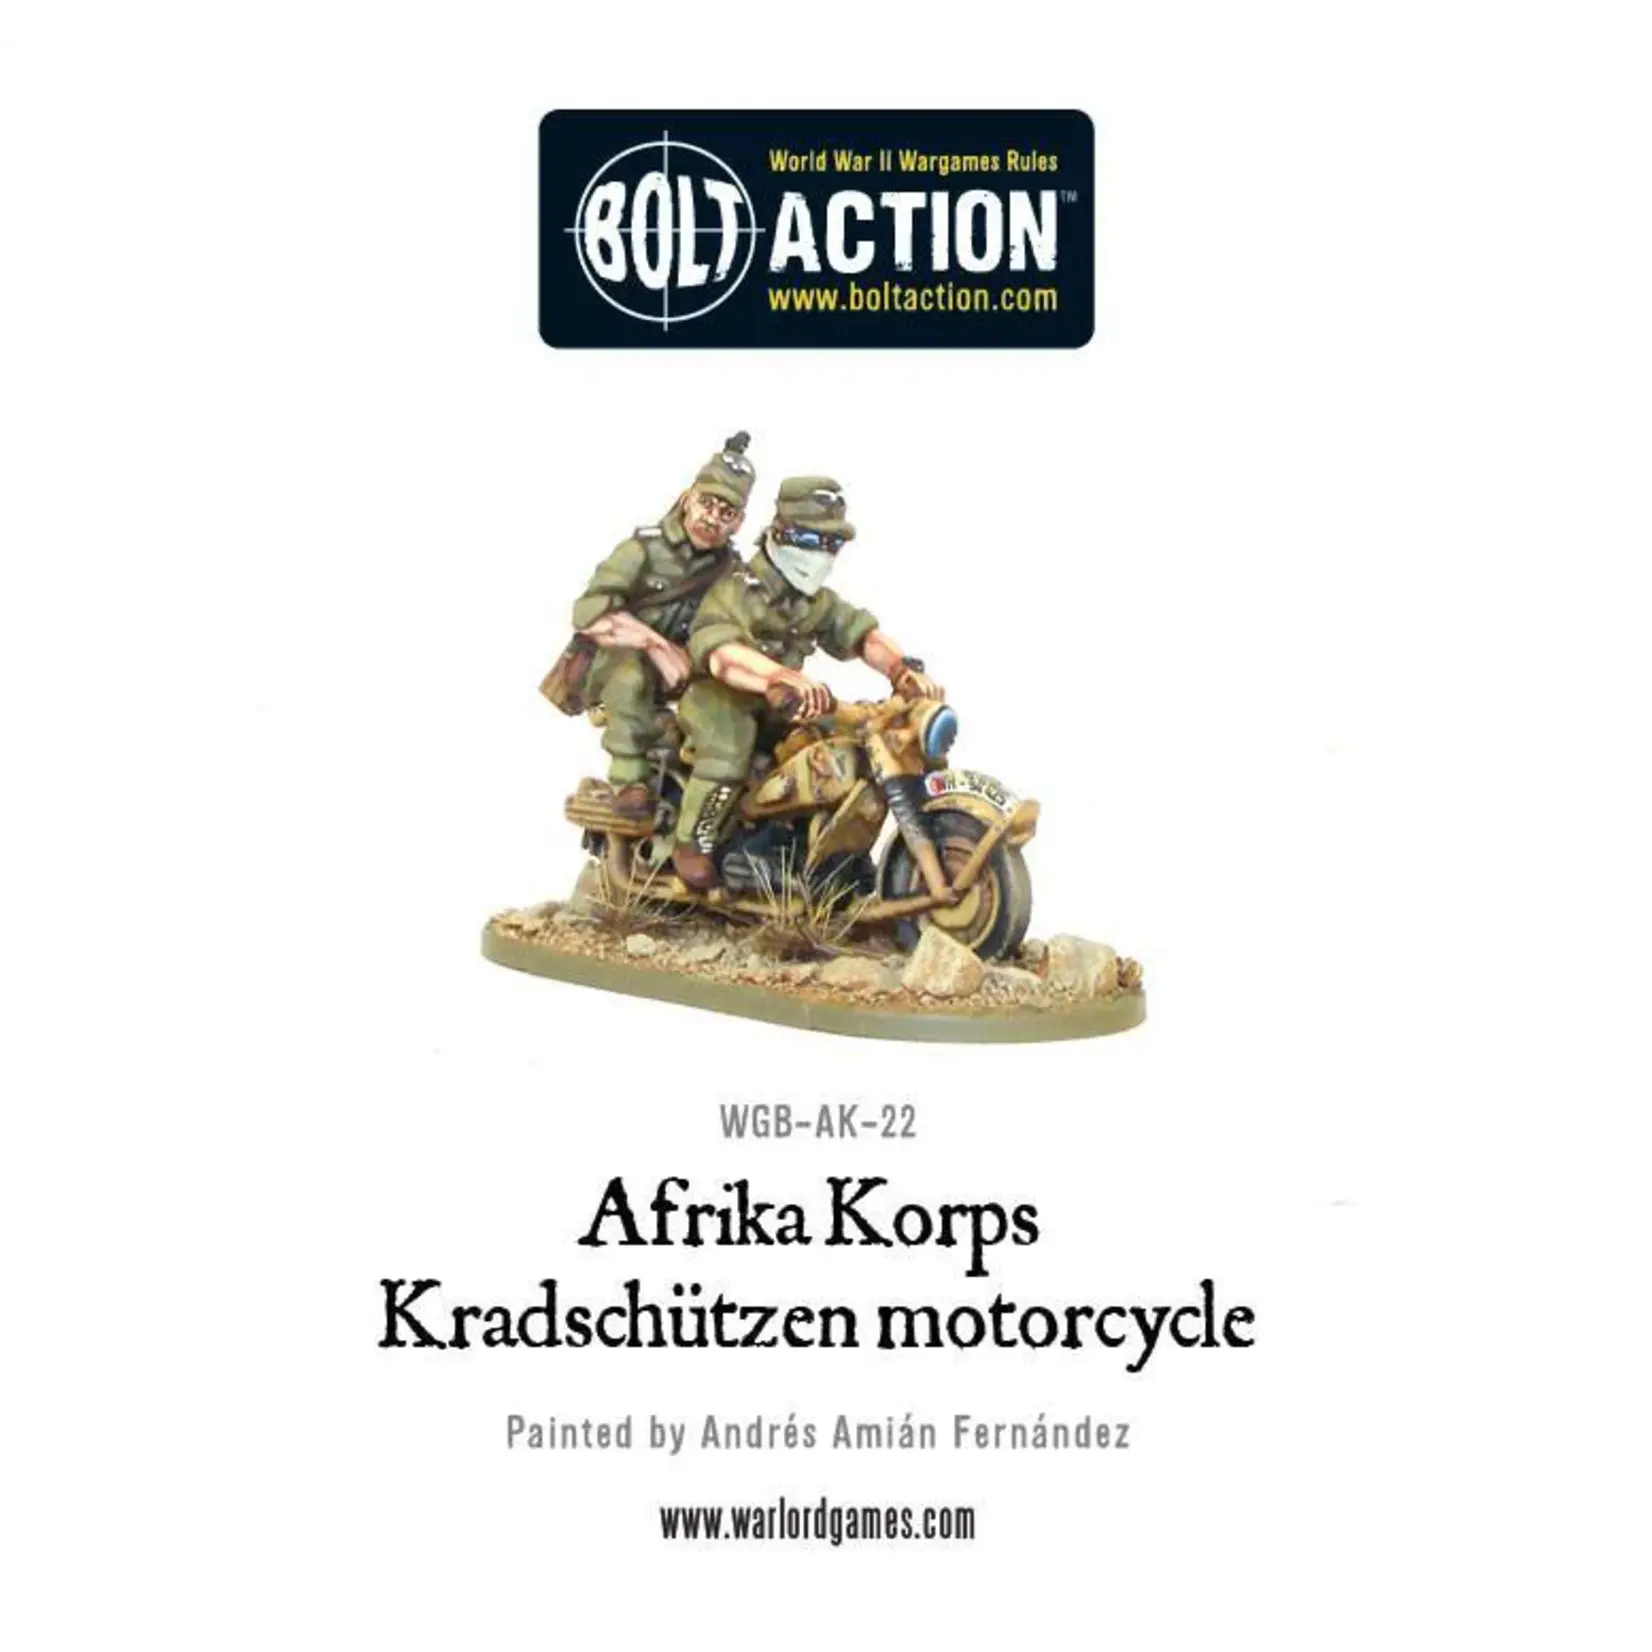 Krad schutzen motorcycle: Afrika Korps - Bolt action